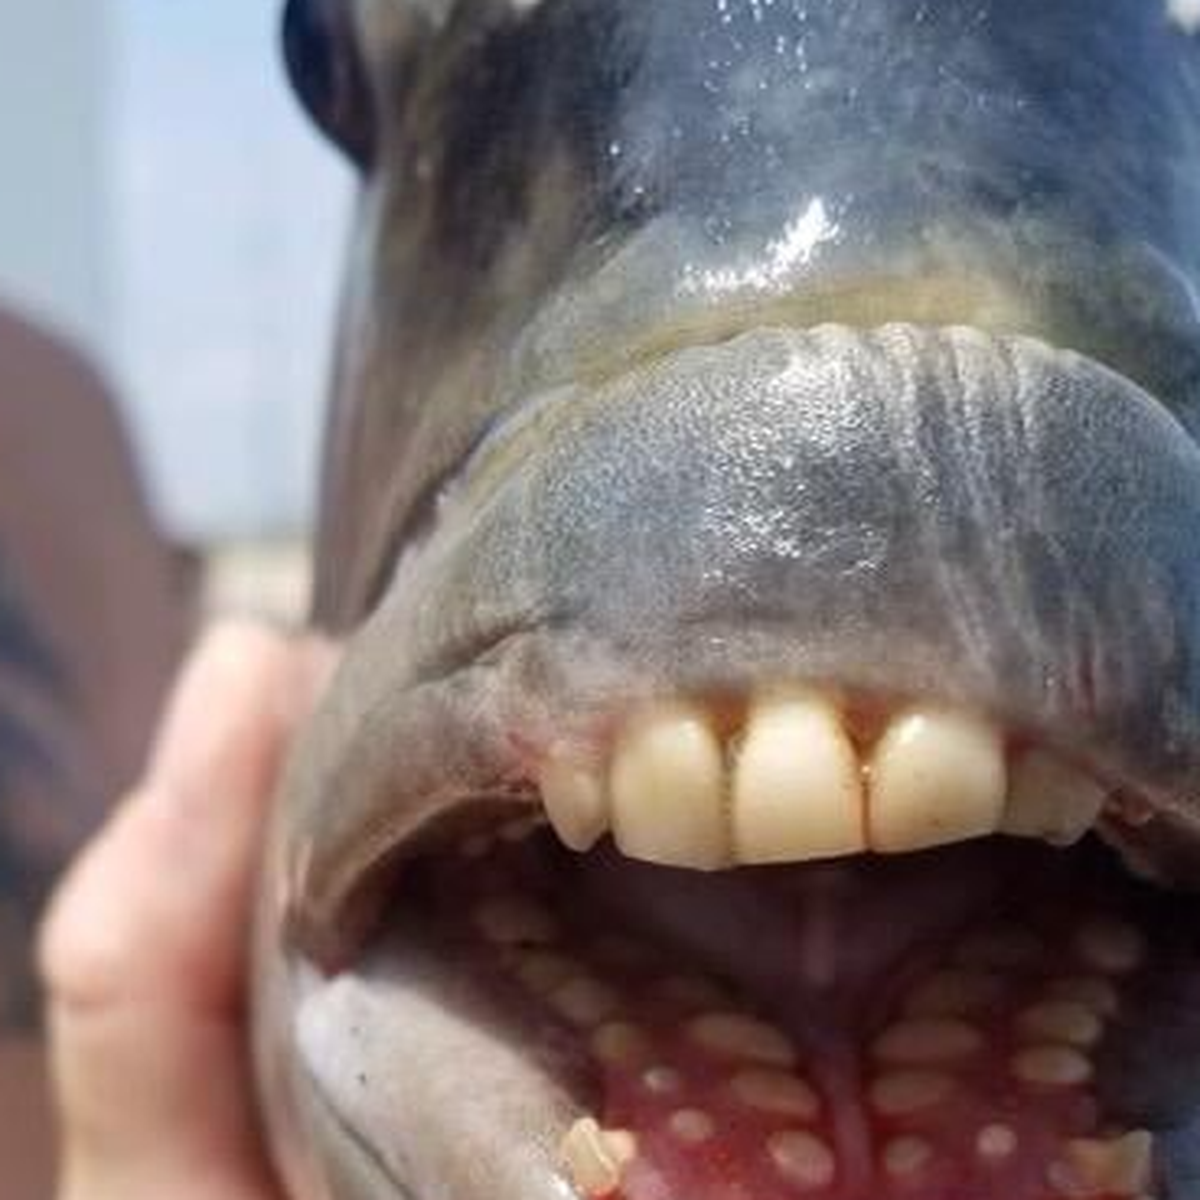 Sheepshead fish with 'human' teeth caught in North Carolina